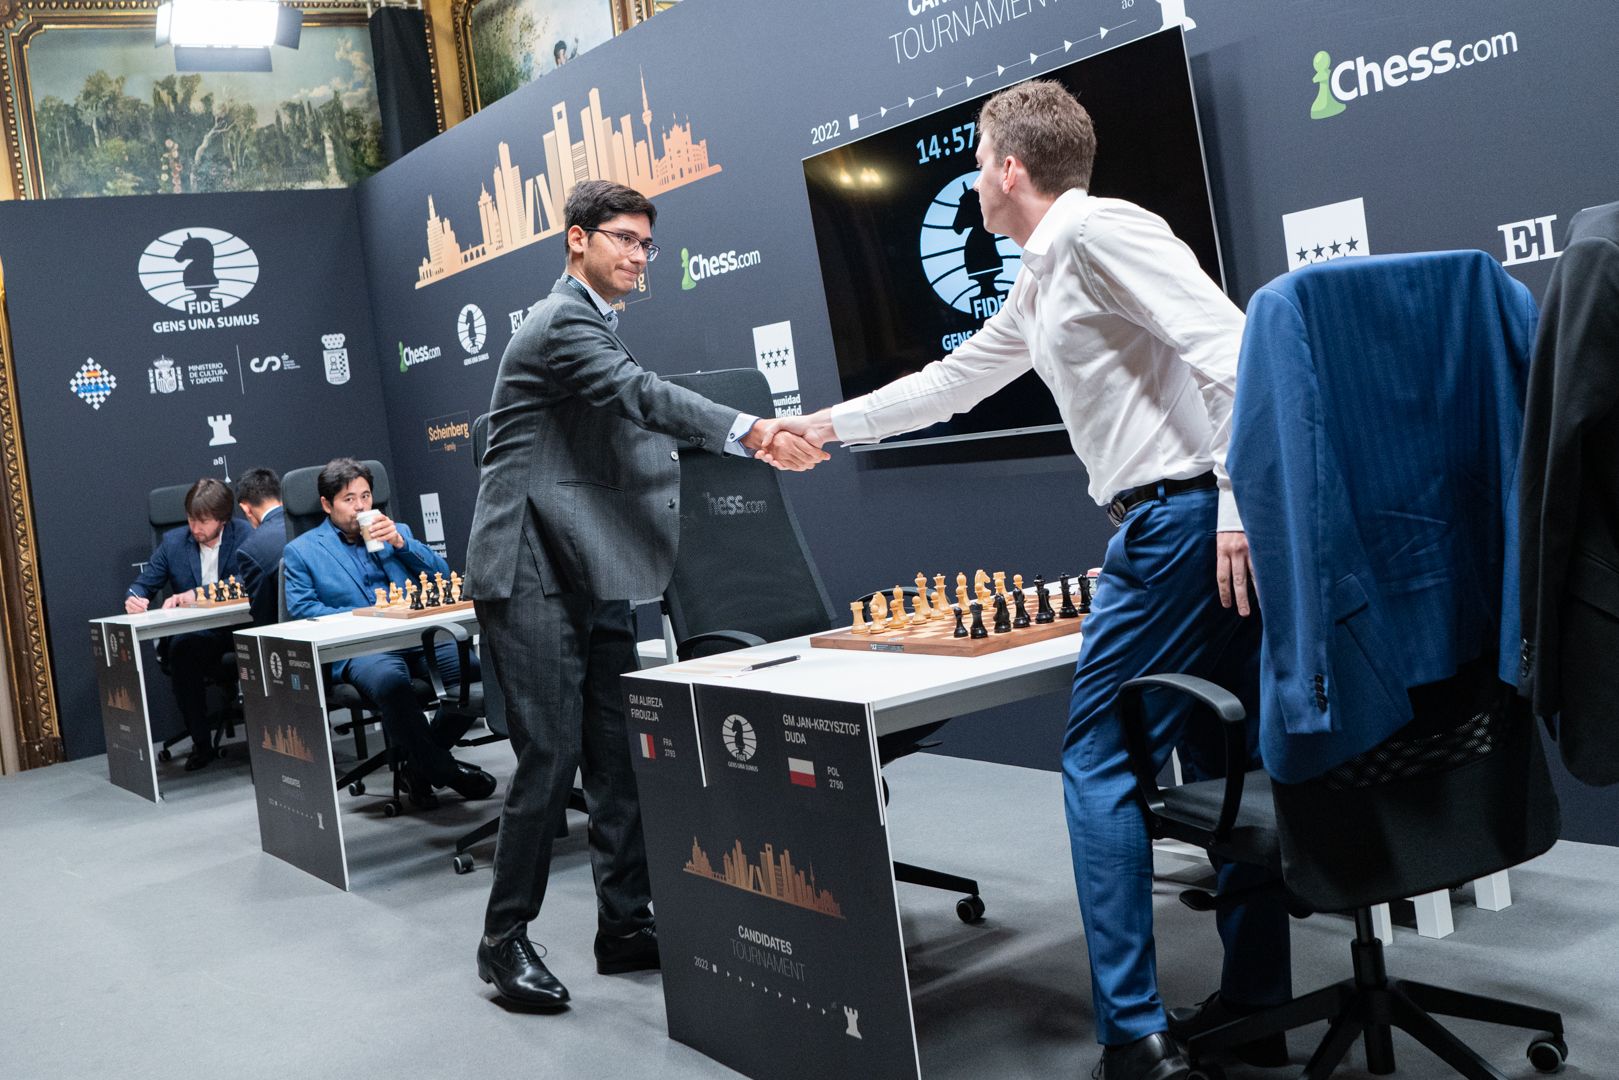 FIDE Candidates Chess 2022 Madrid – Chessdom